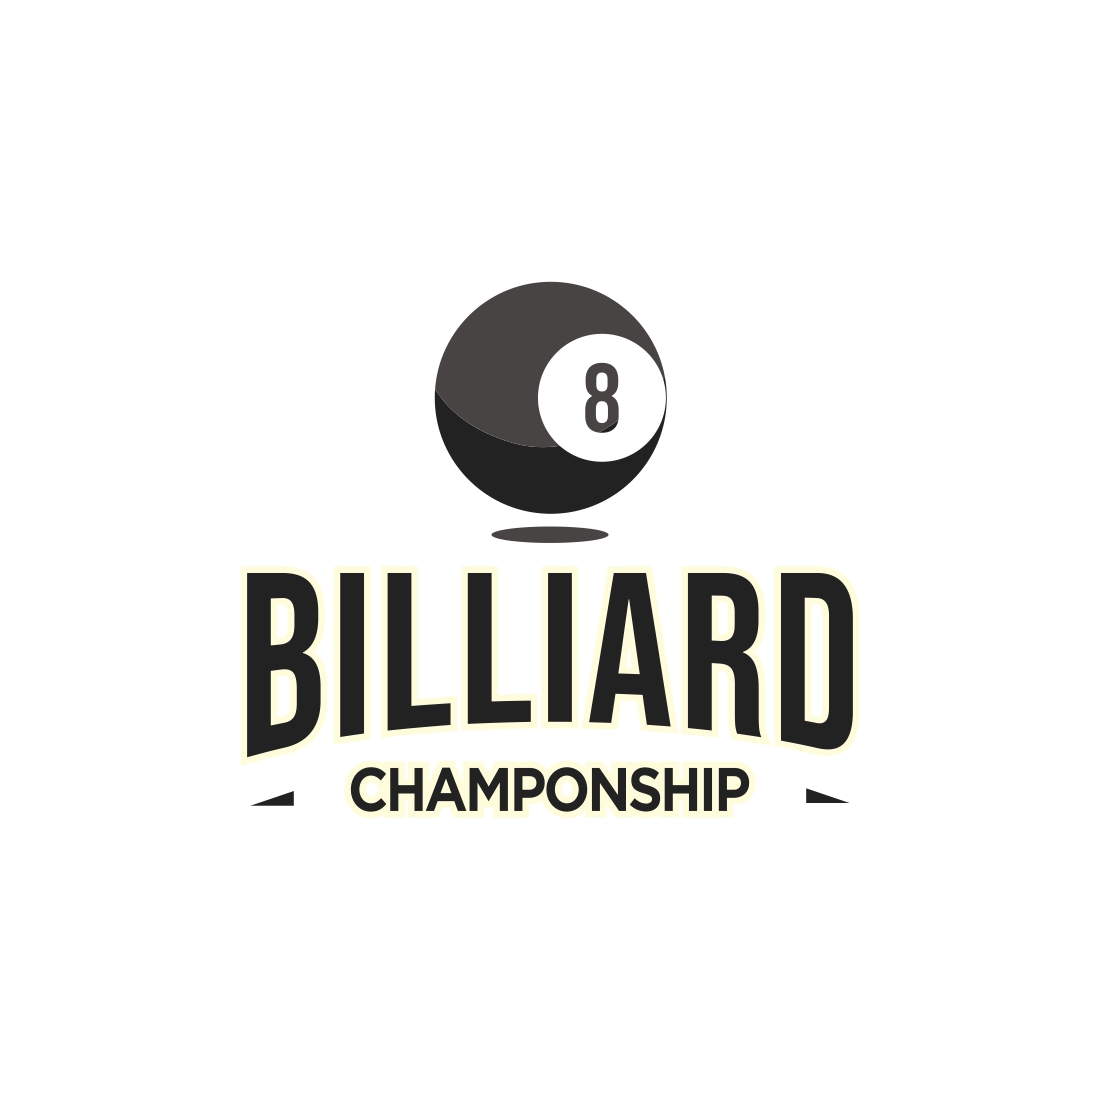 Billiards logo, Sports label for billiards room, Billiards logo template preview image.